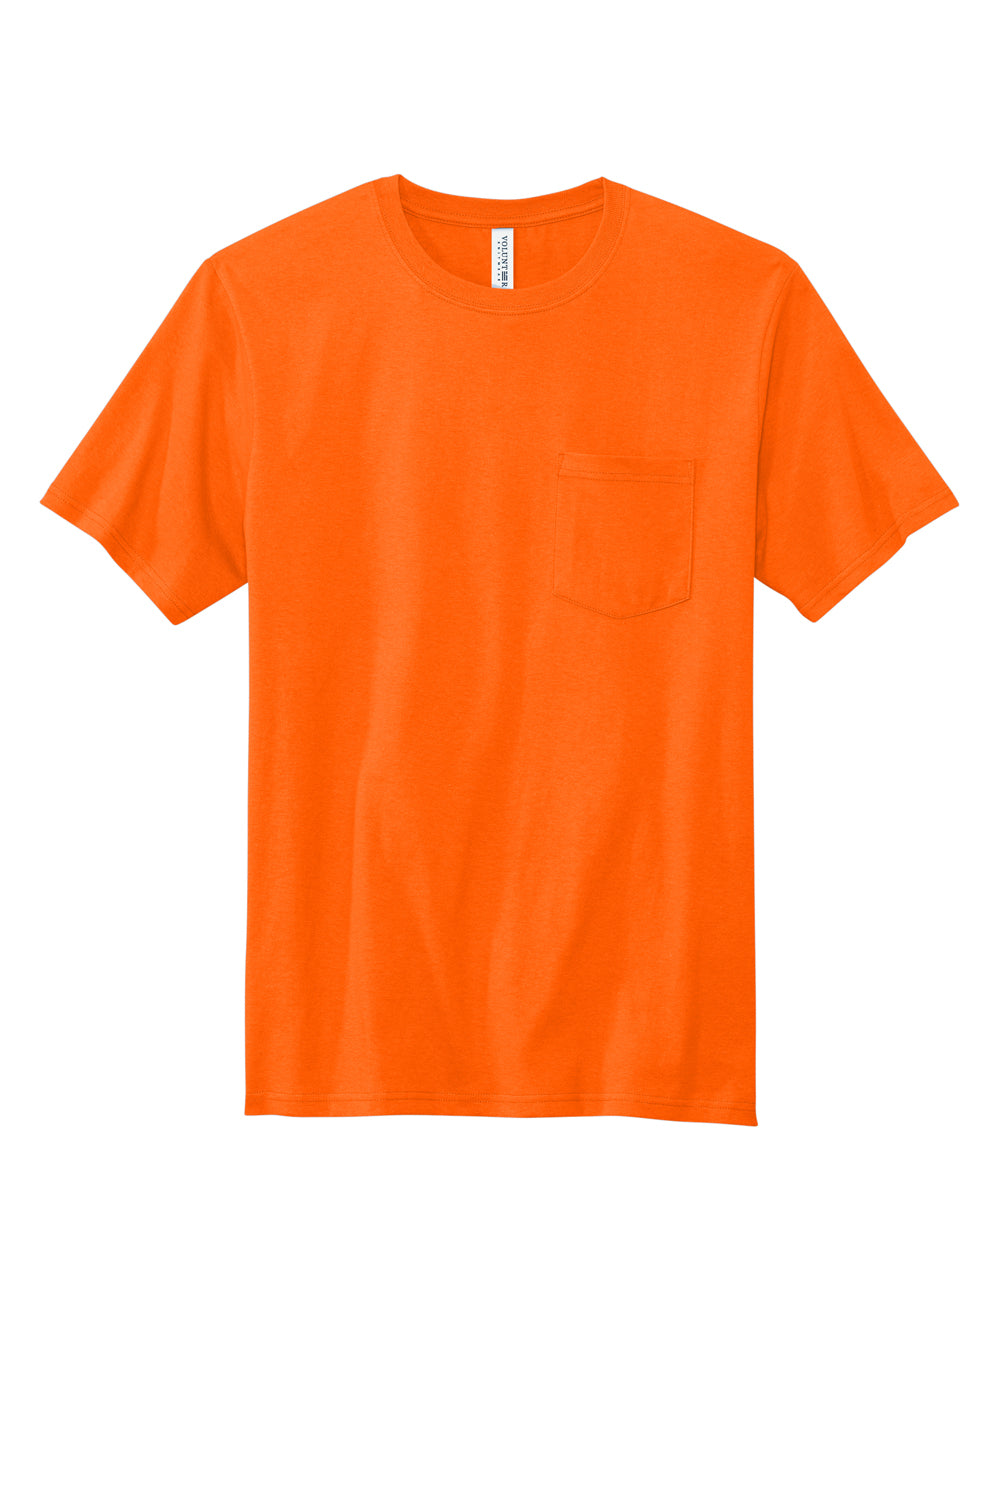 Volunteer Knitwear VL100P USA Made All American Short Sleeve Crewneck T-Shirt w/ Pocket Safety Orange Flat Front